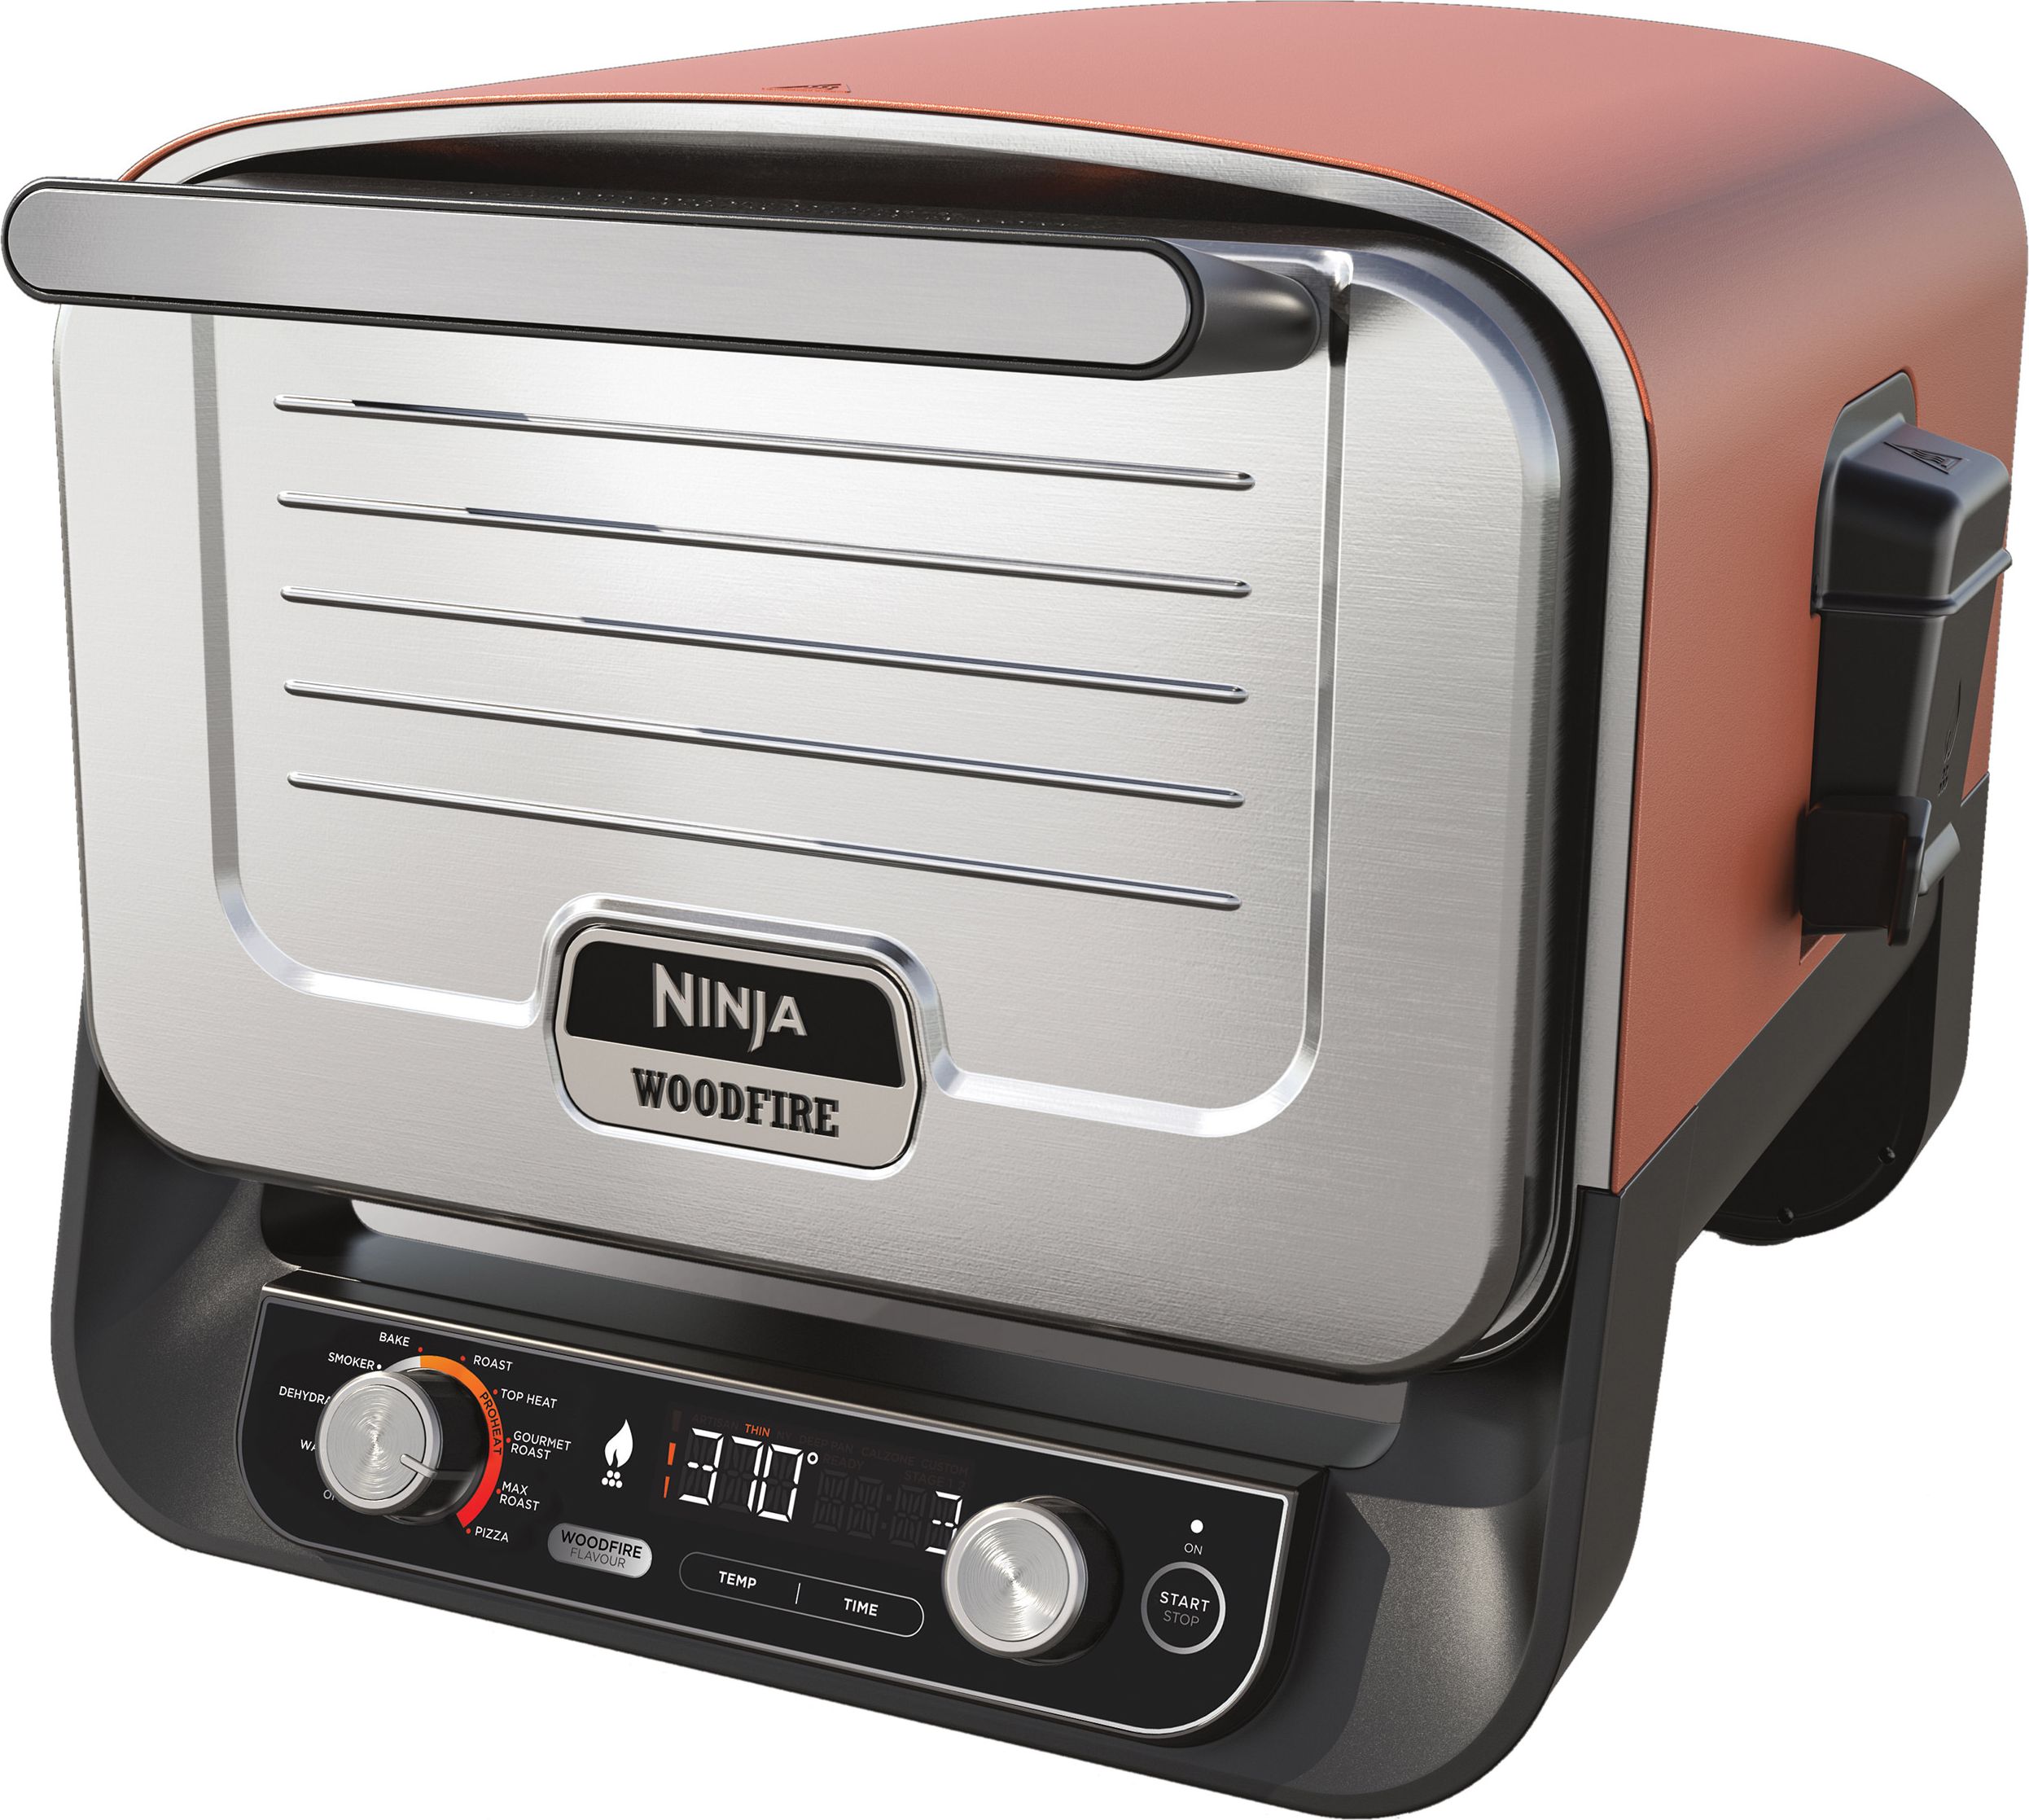 Ninja Woodfire Electric Outdoor Oven OO101UK Health Grill - Terracotta, Brown